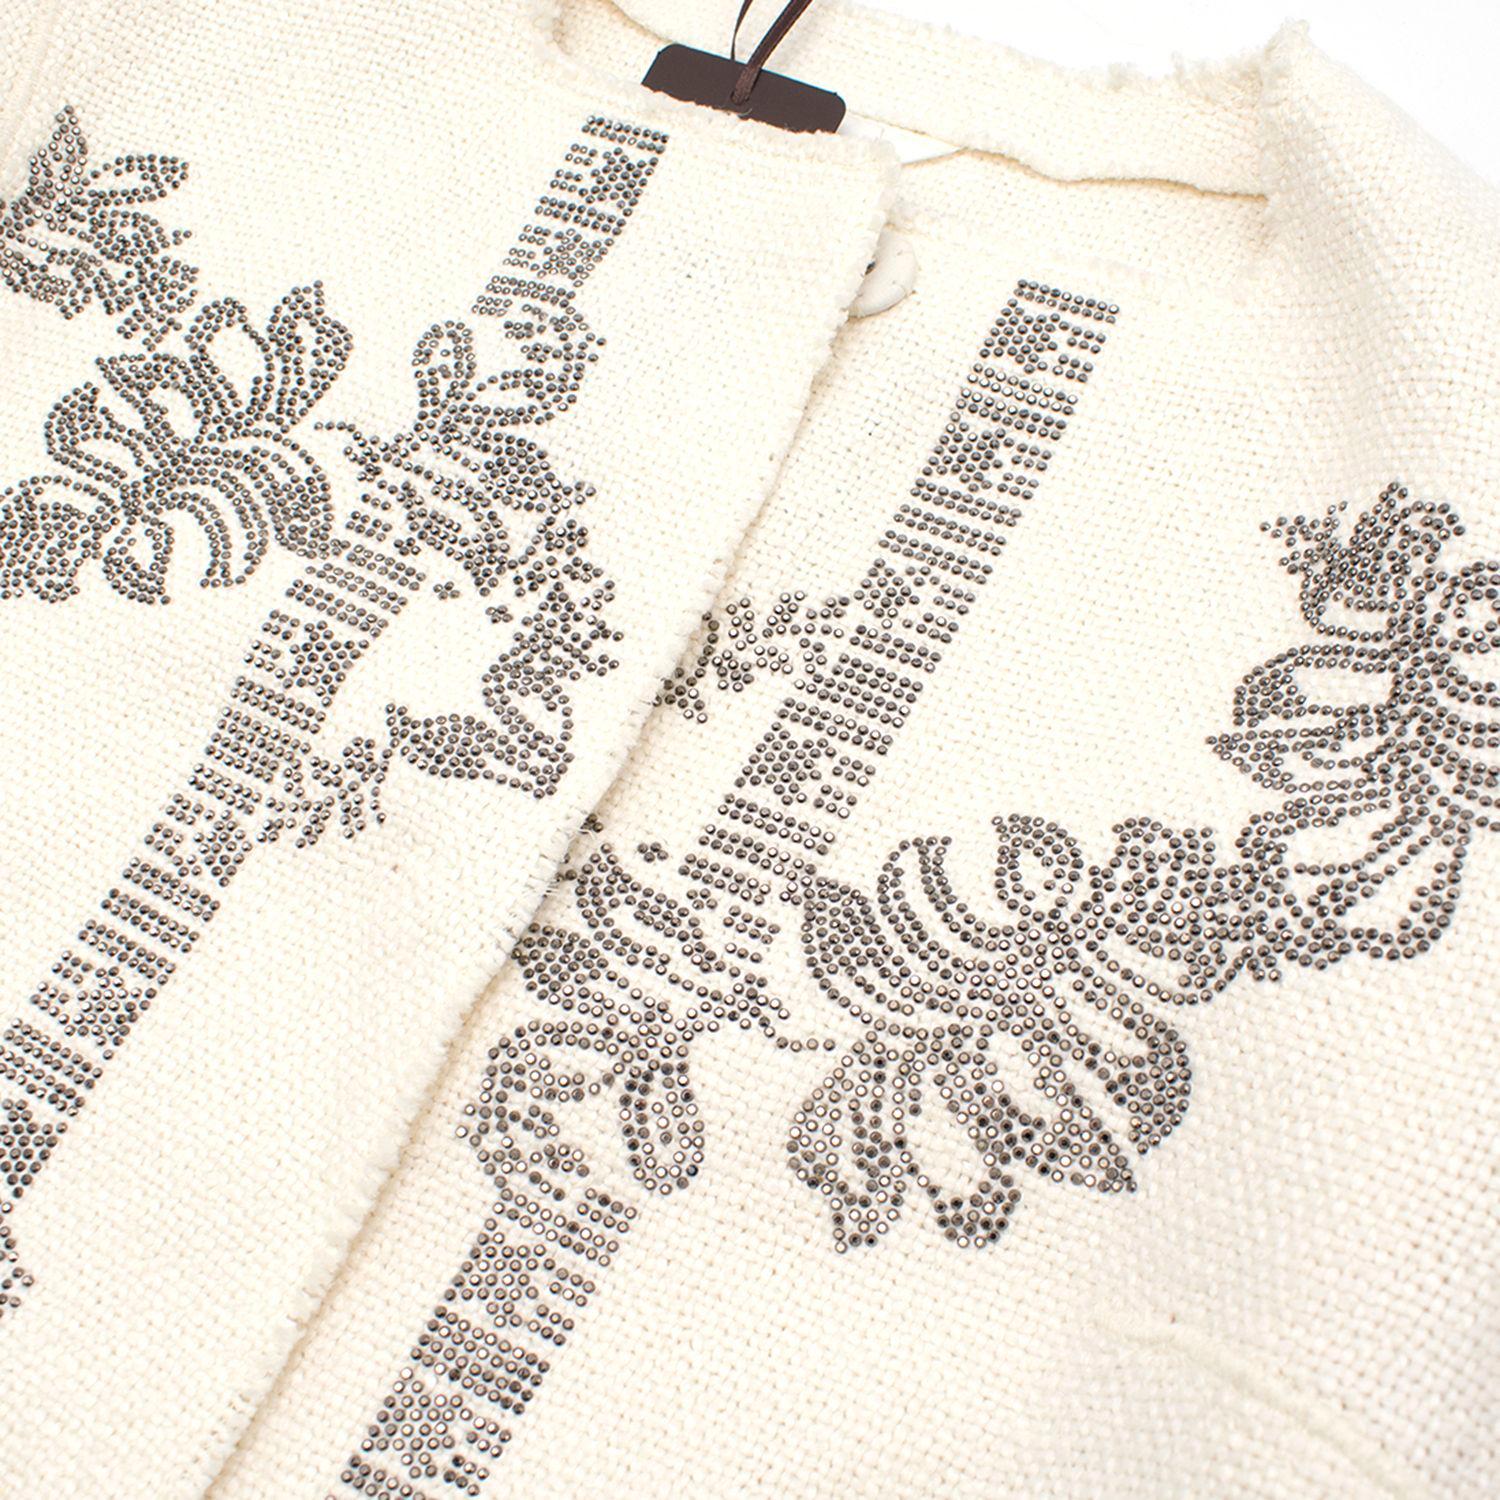 Ermano Scervino Linen Jacket With Crystal embelishements - Size US 2 For Sale 4